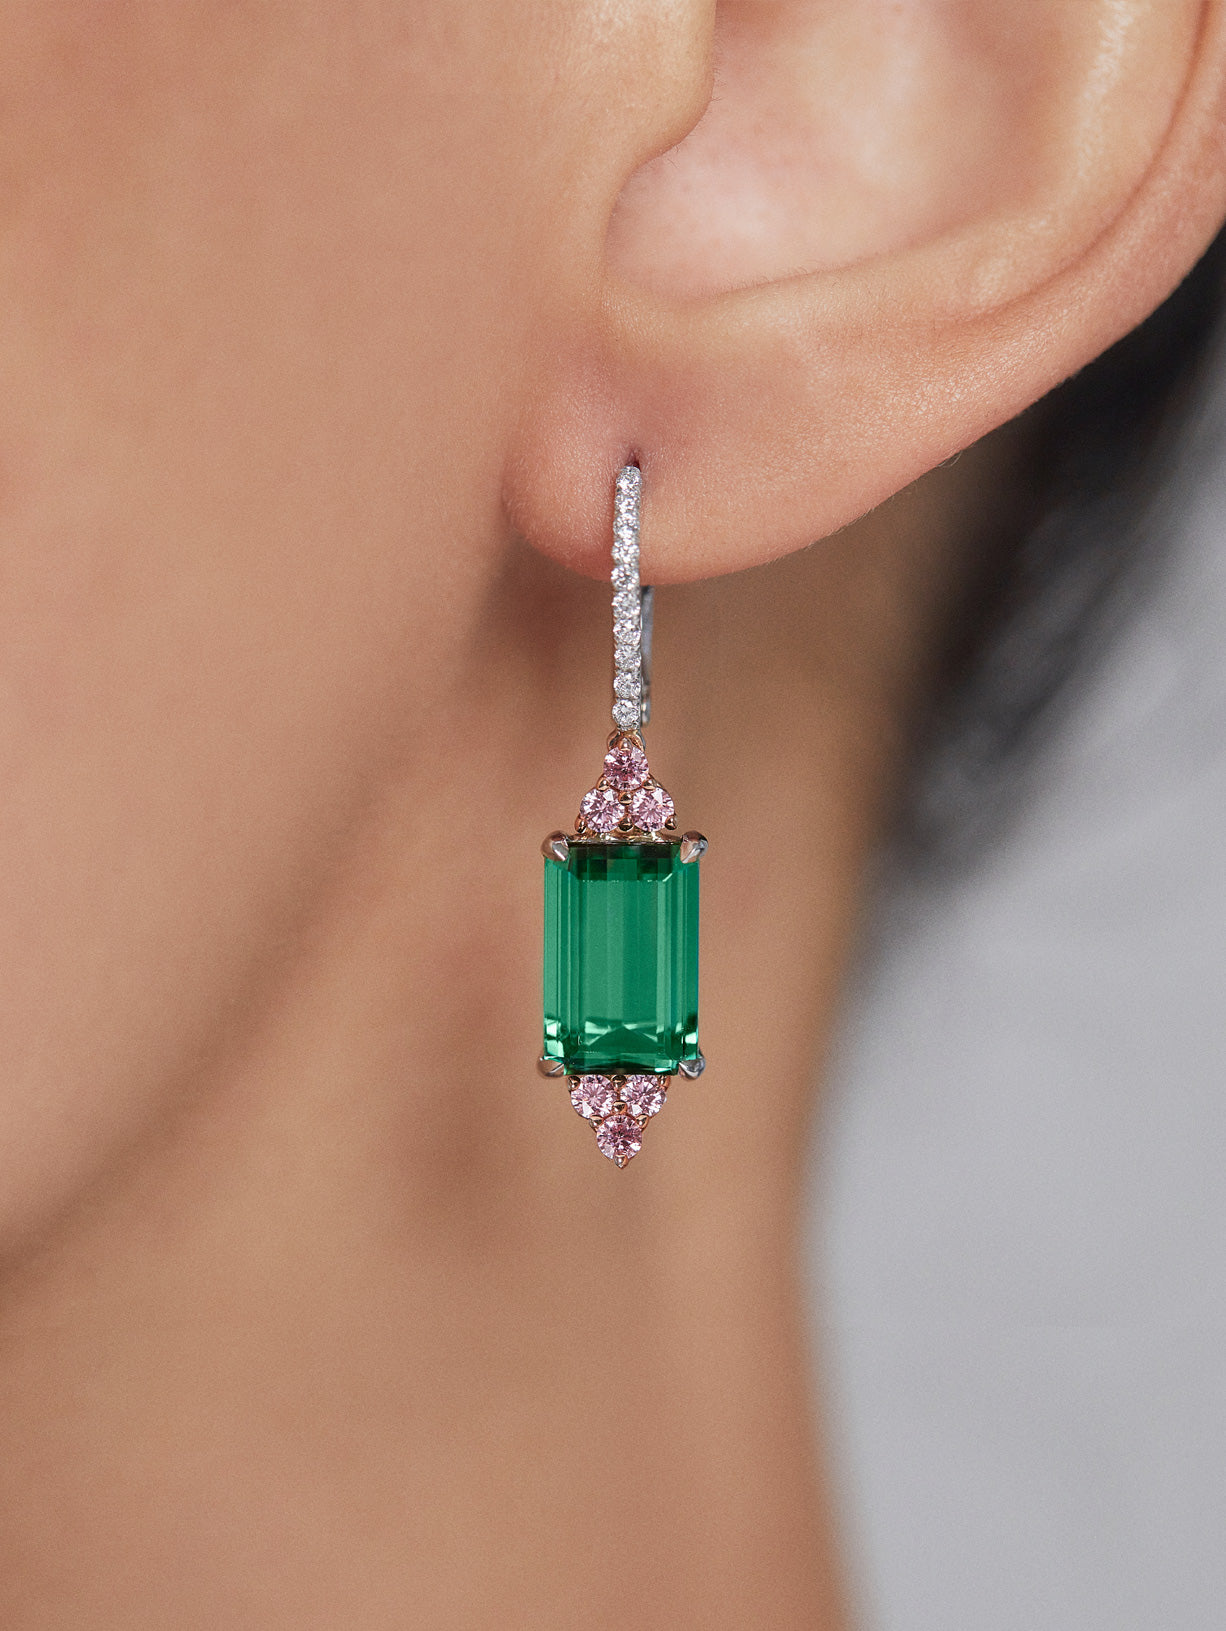 Green Tourmaline and Argyle Pink™ Diamond Earrings - Pink Diamonds, J FINE - J Fine, earrings - Pink Diamond Jewelry, j-fine-green-tourmaline-and-pink-diamond-earrings - Argyle Pink Diamond